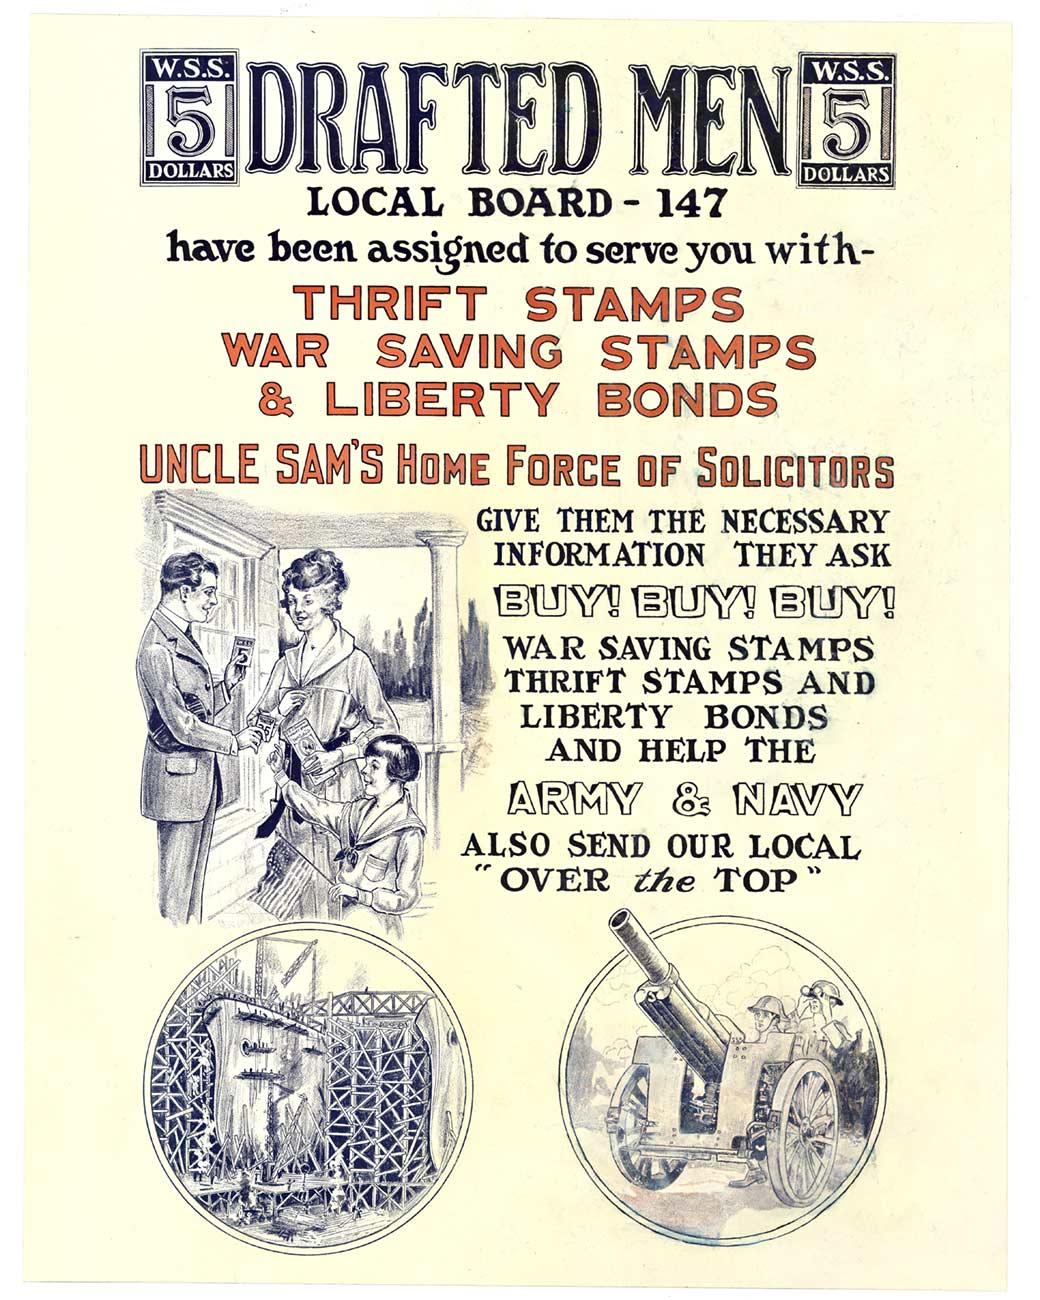 Unknown Portrait Print - Original "Drafted Men, War Savings Stamps 5 Dollars" vintage American poster